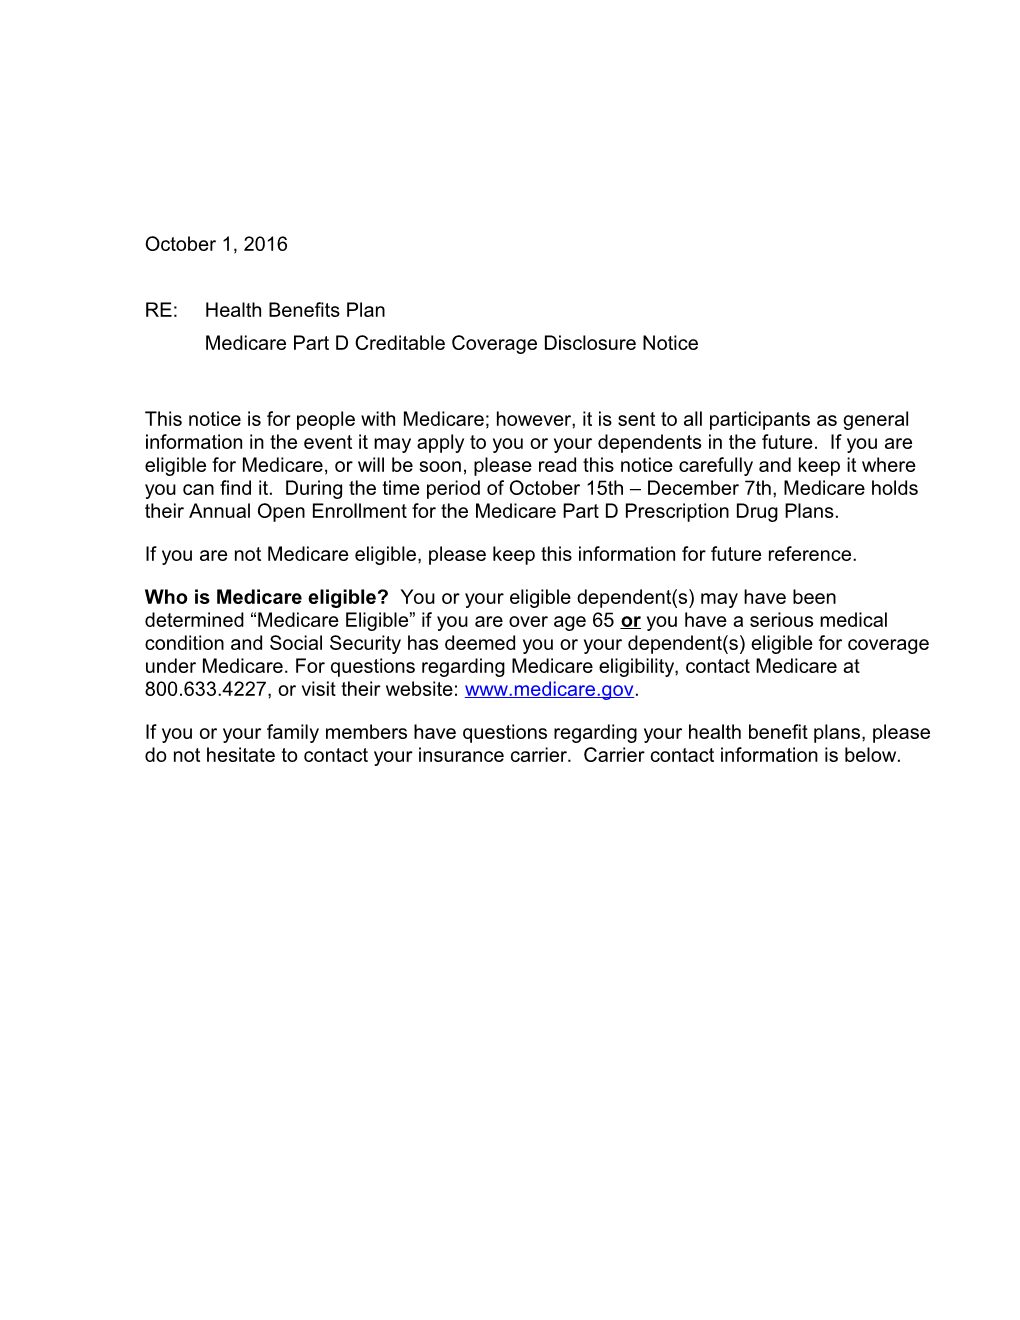 Medicare Part D Creditable Coverage Disclosure Notice